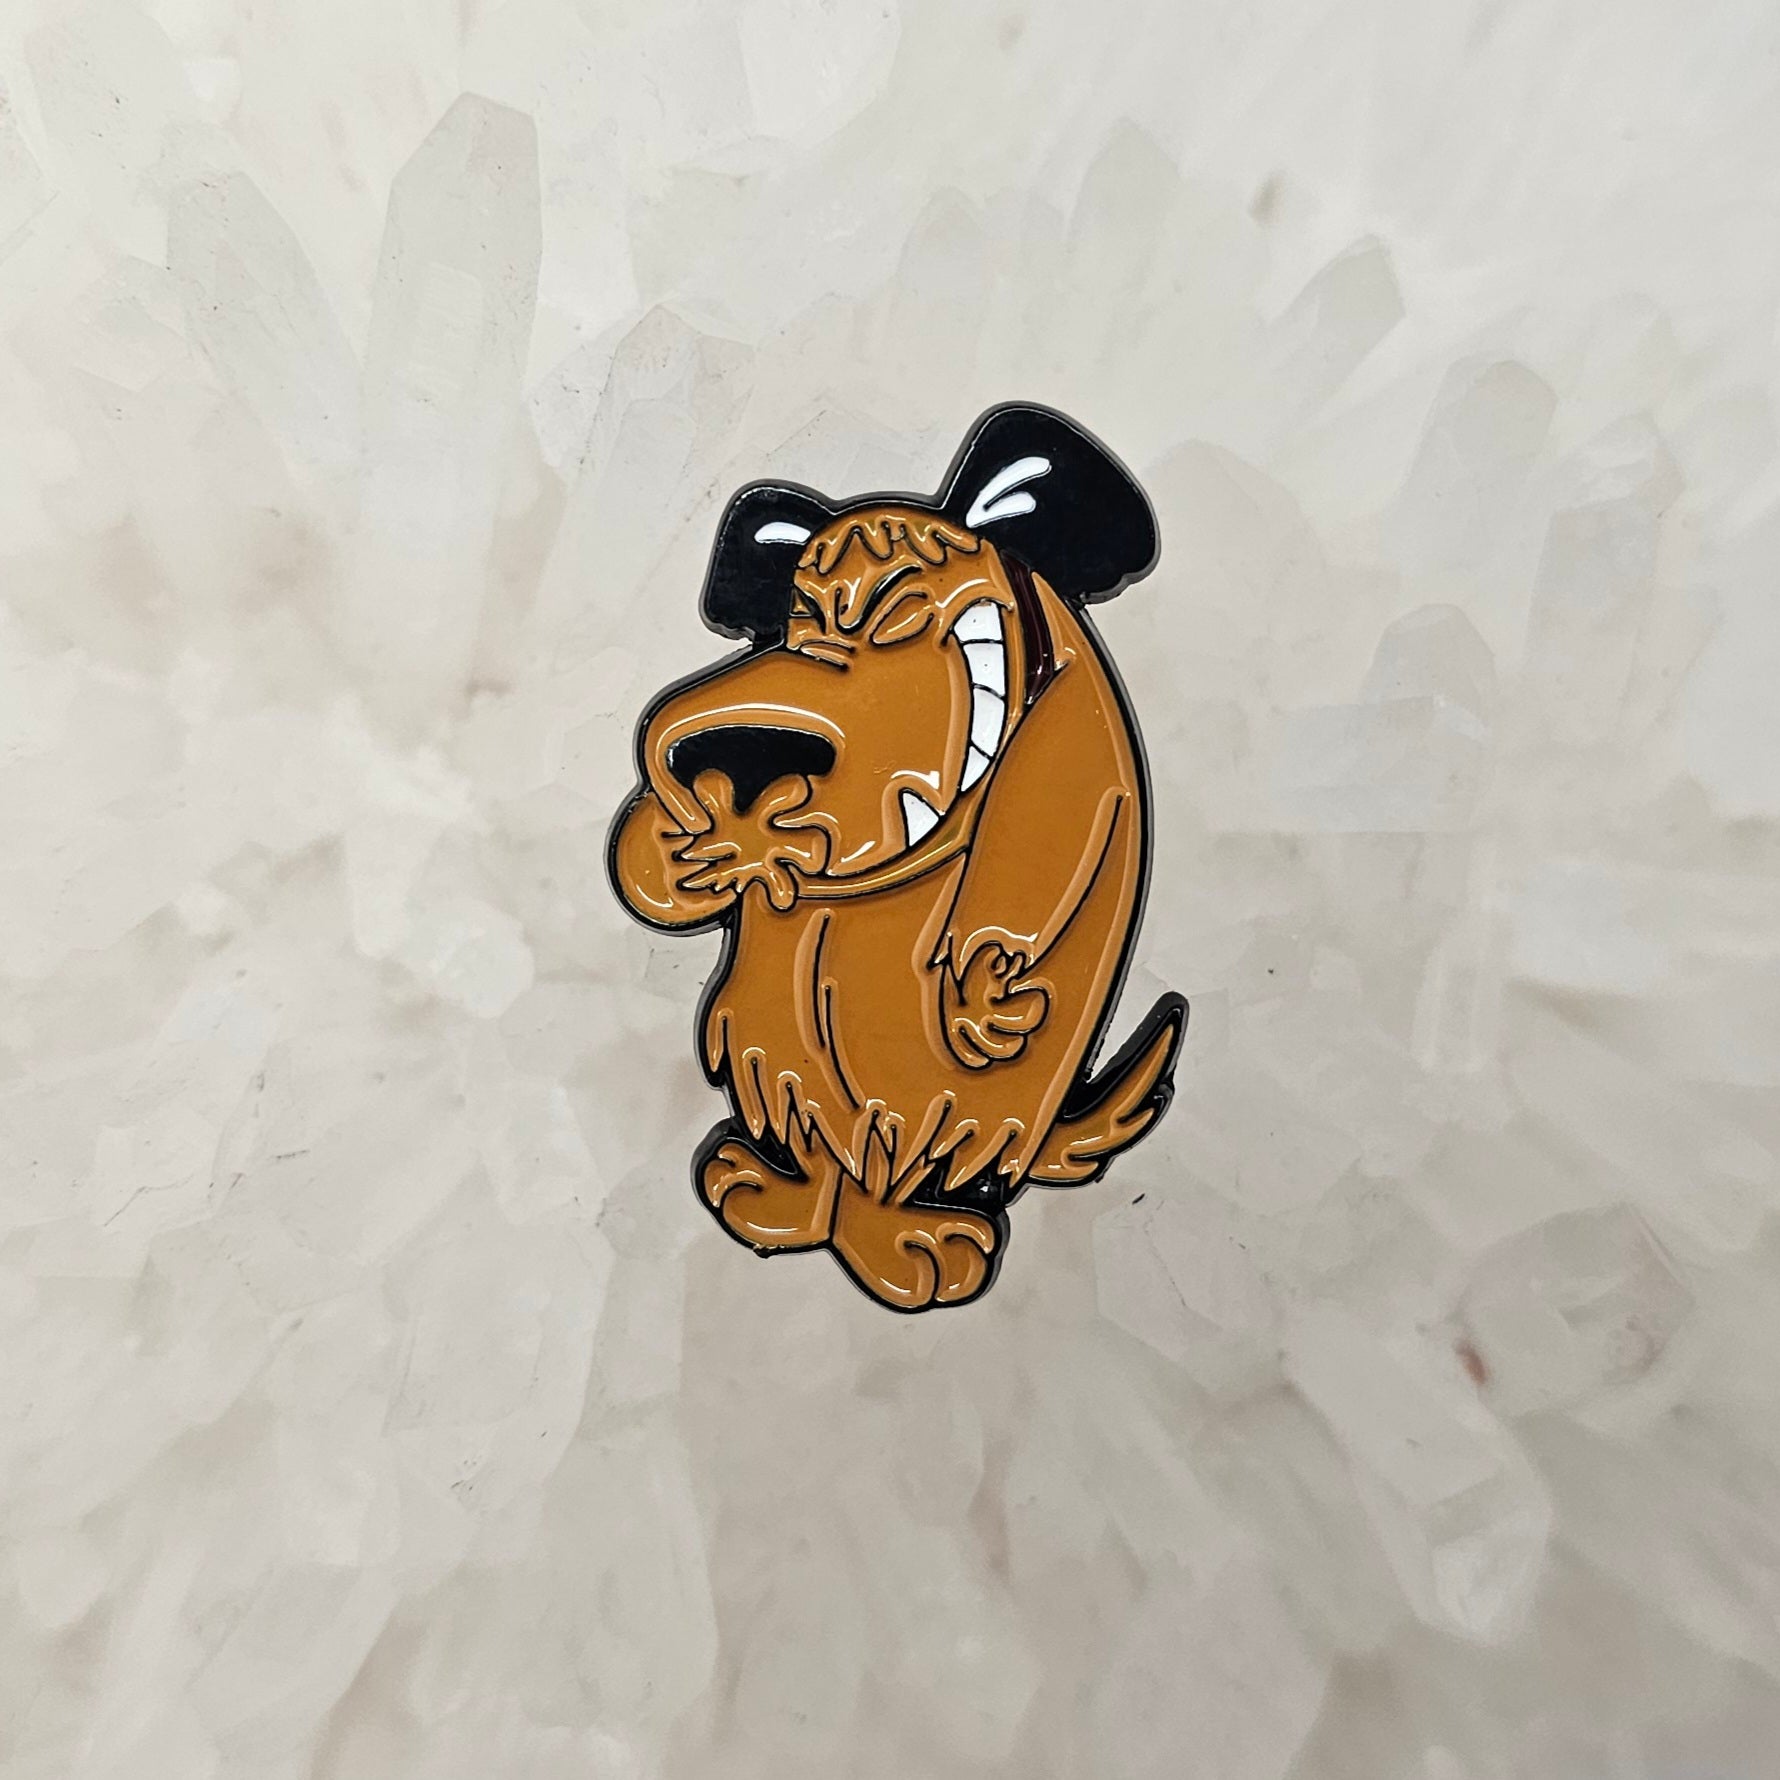 Silly Pup Classic Cartoon Dog Enamel Pins Hat Pins Lapel Pin Brooch Badge Festival Pin